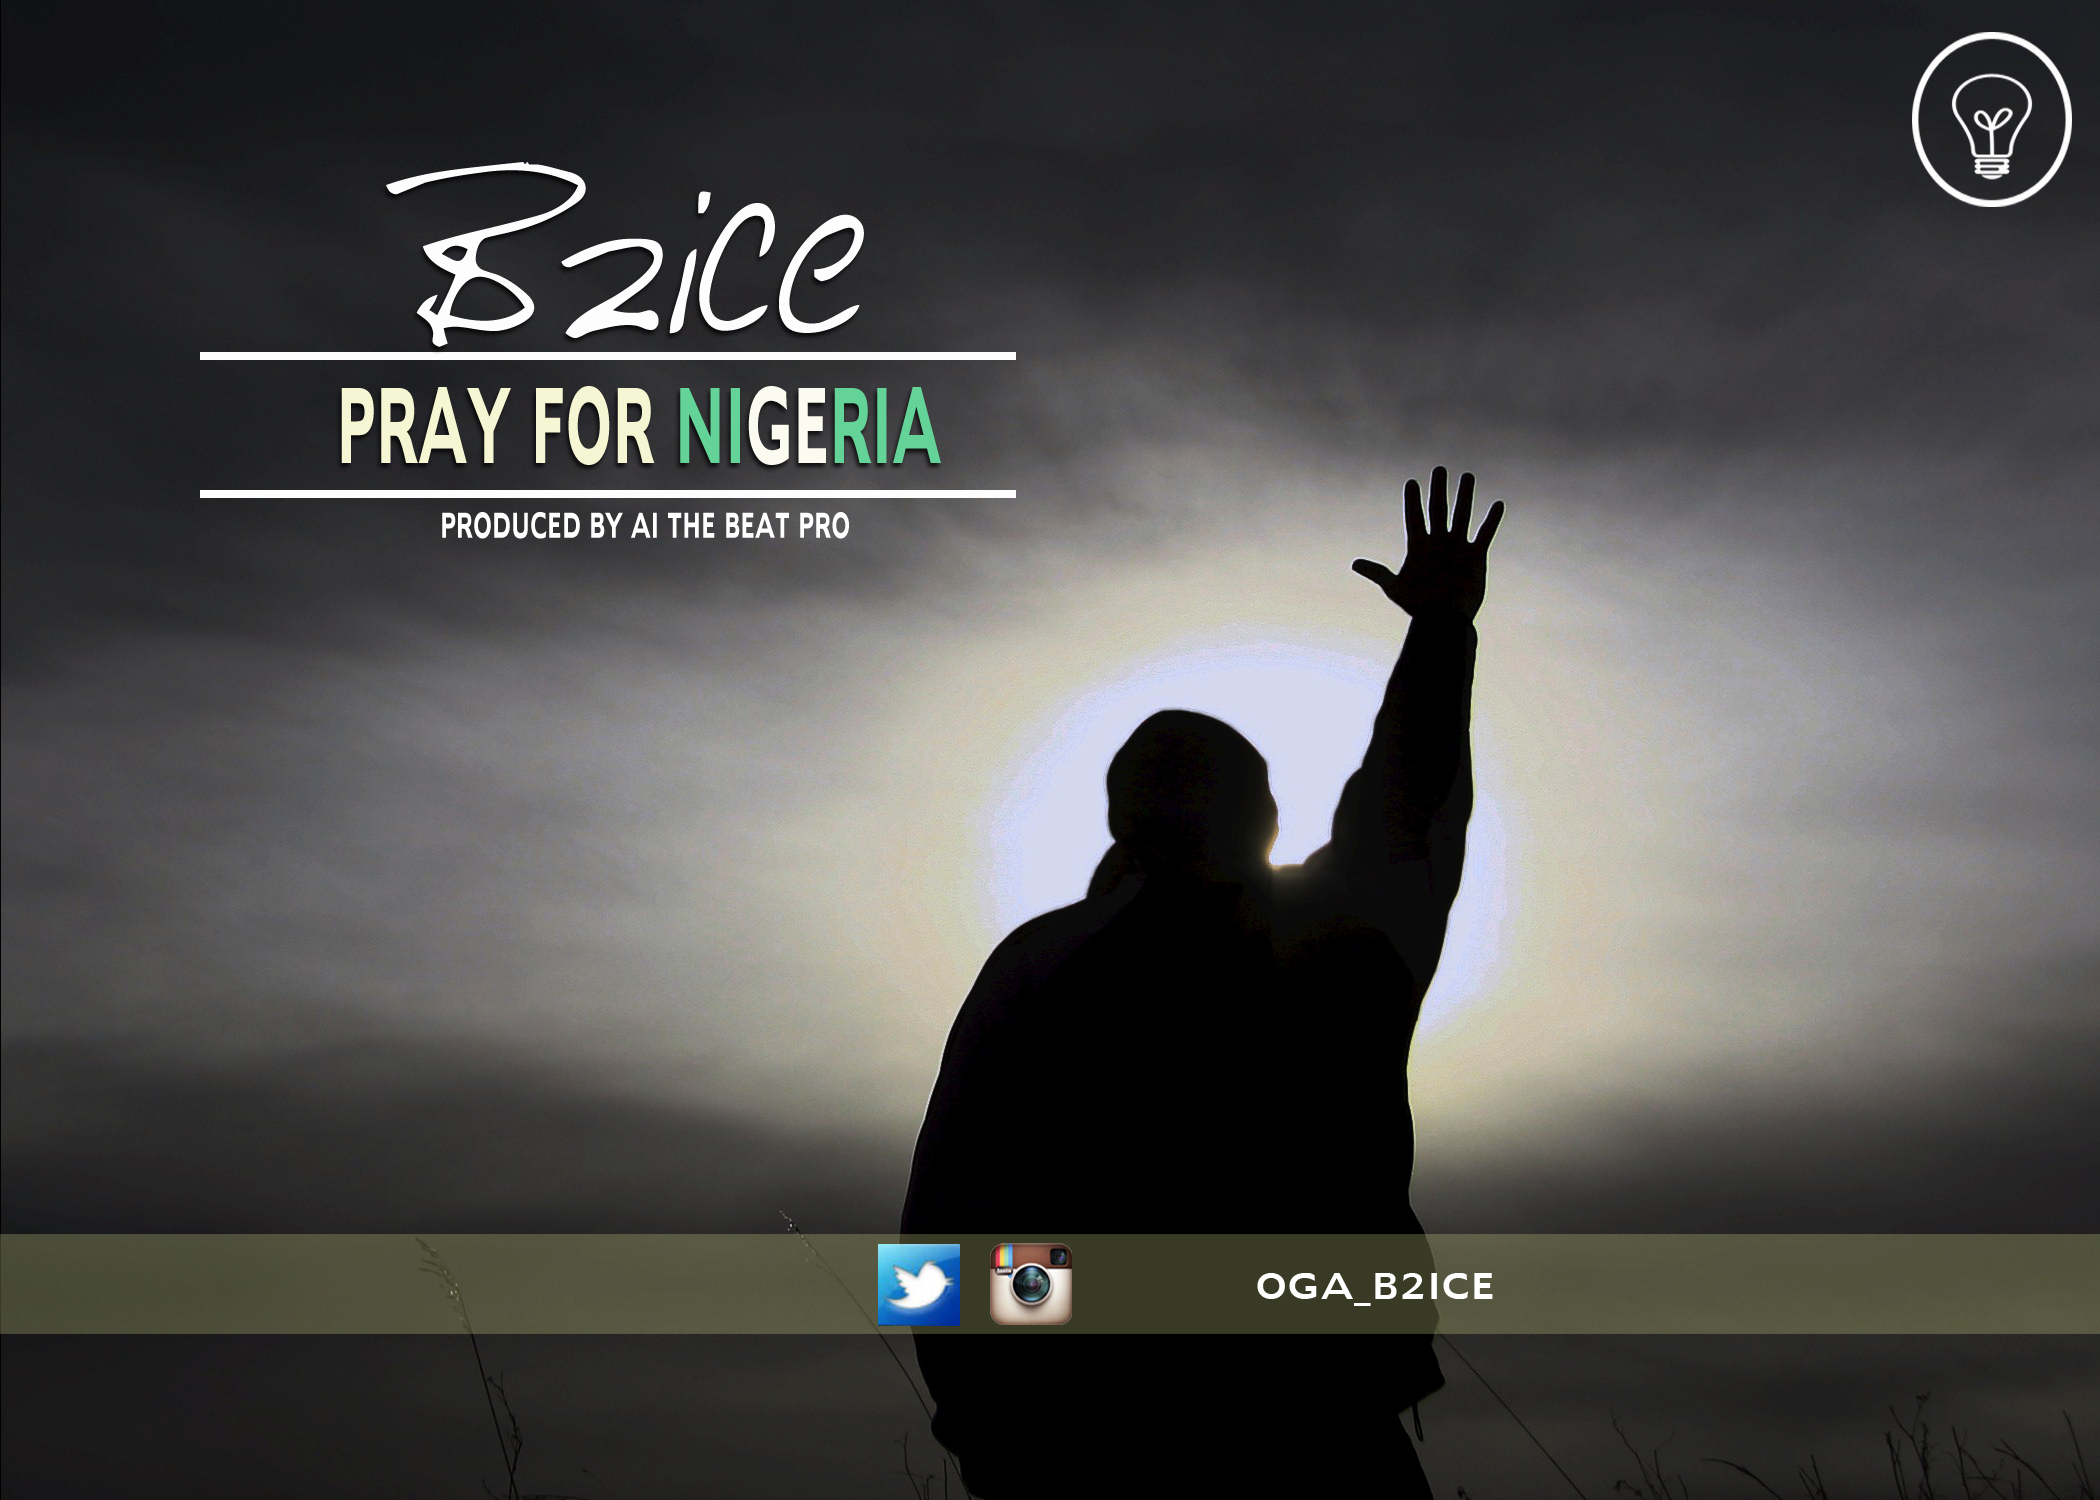 MUSIC: B2ice - Pray For Nigeria. 